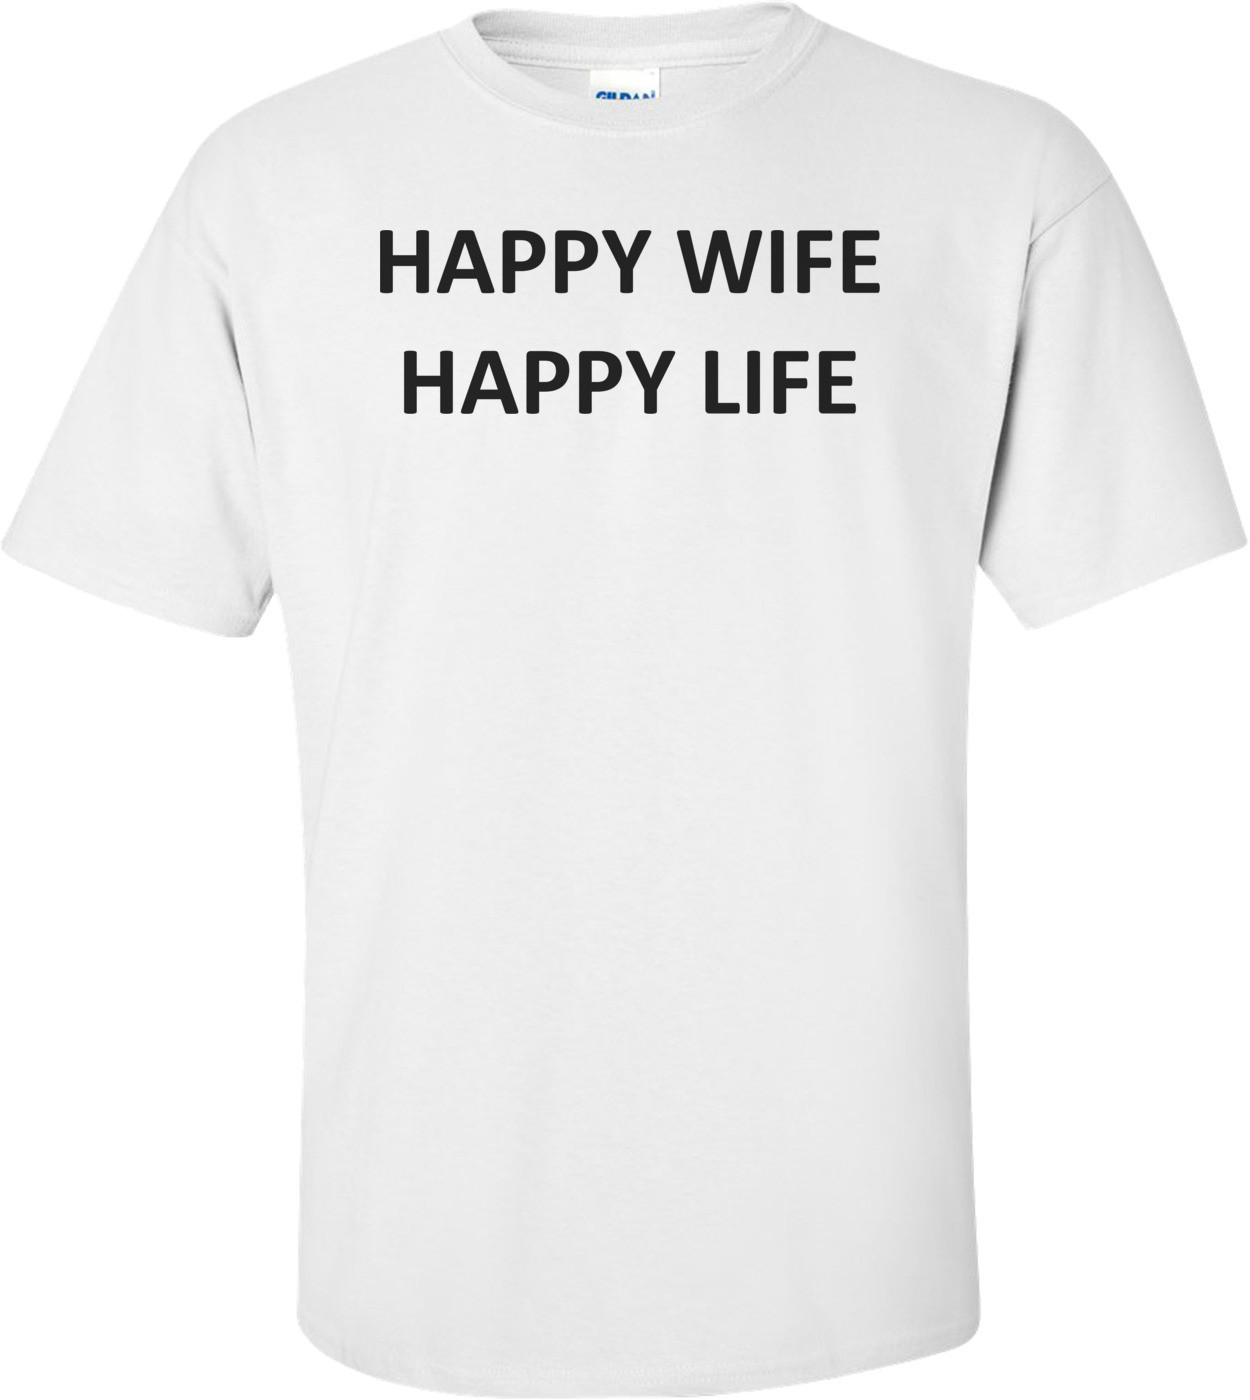 HAPPY WIFE HAPPY LIFE Shirt